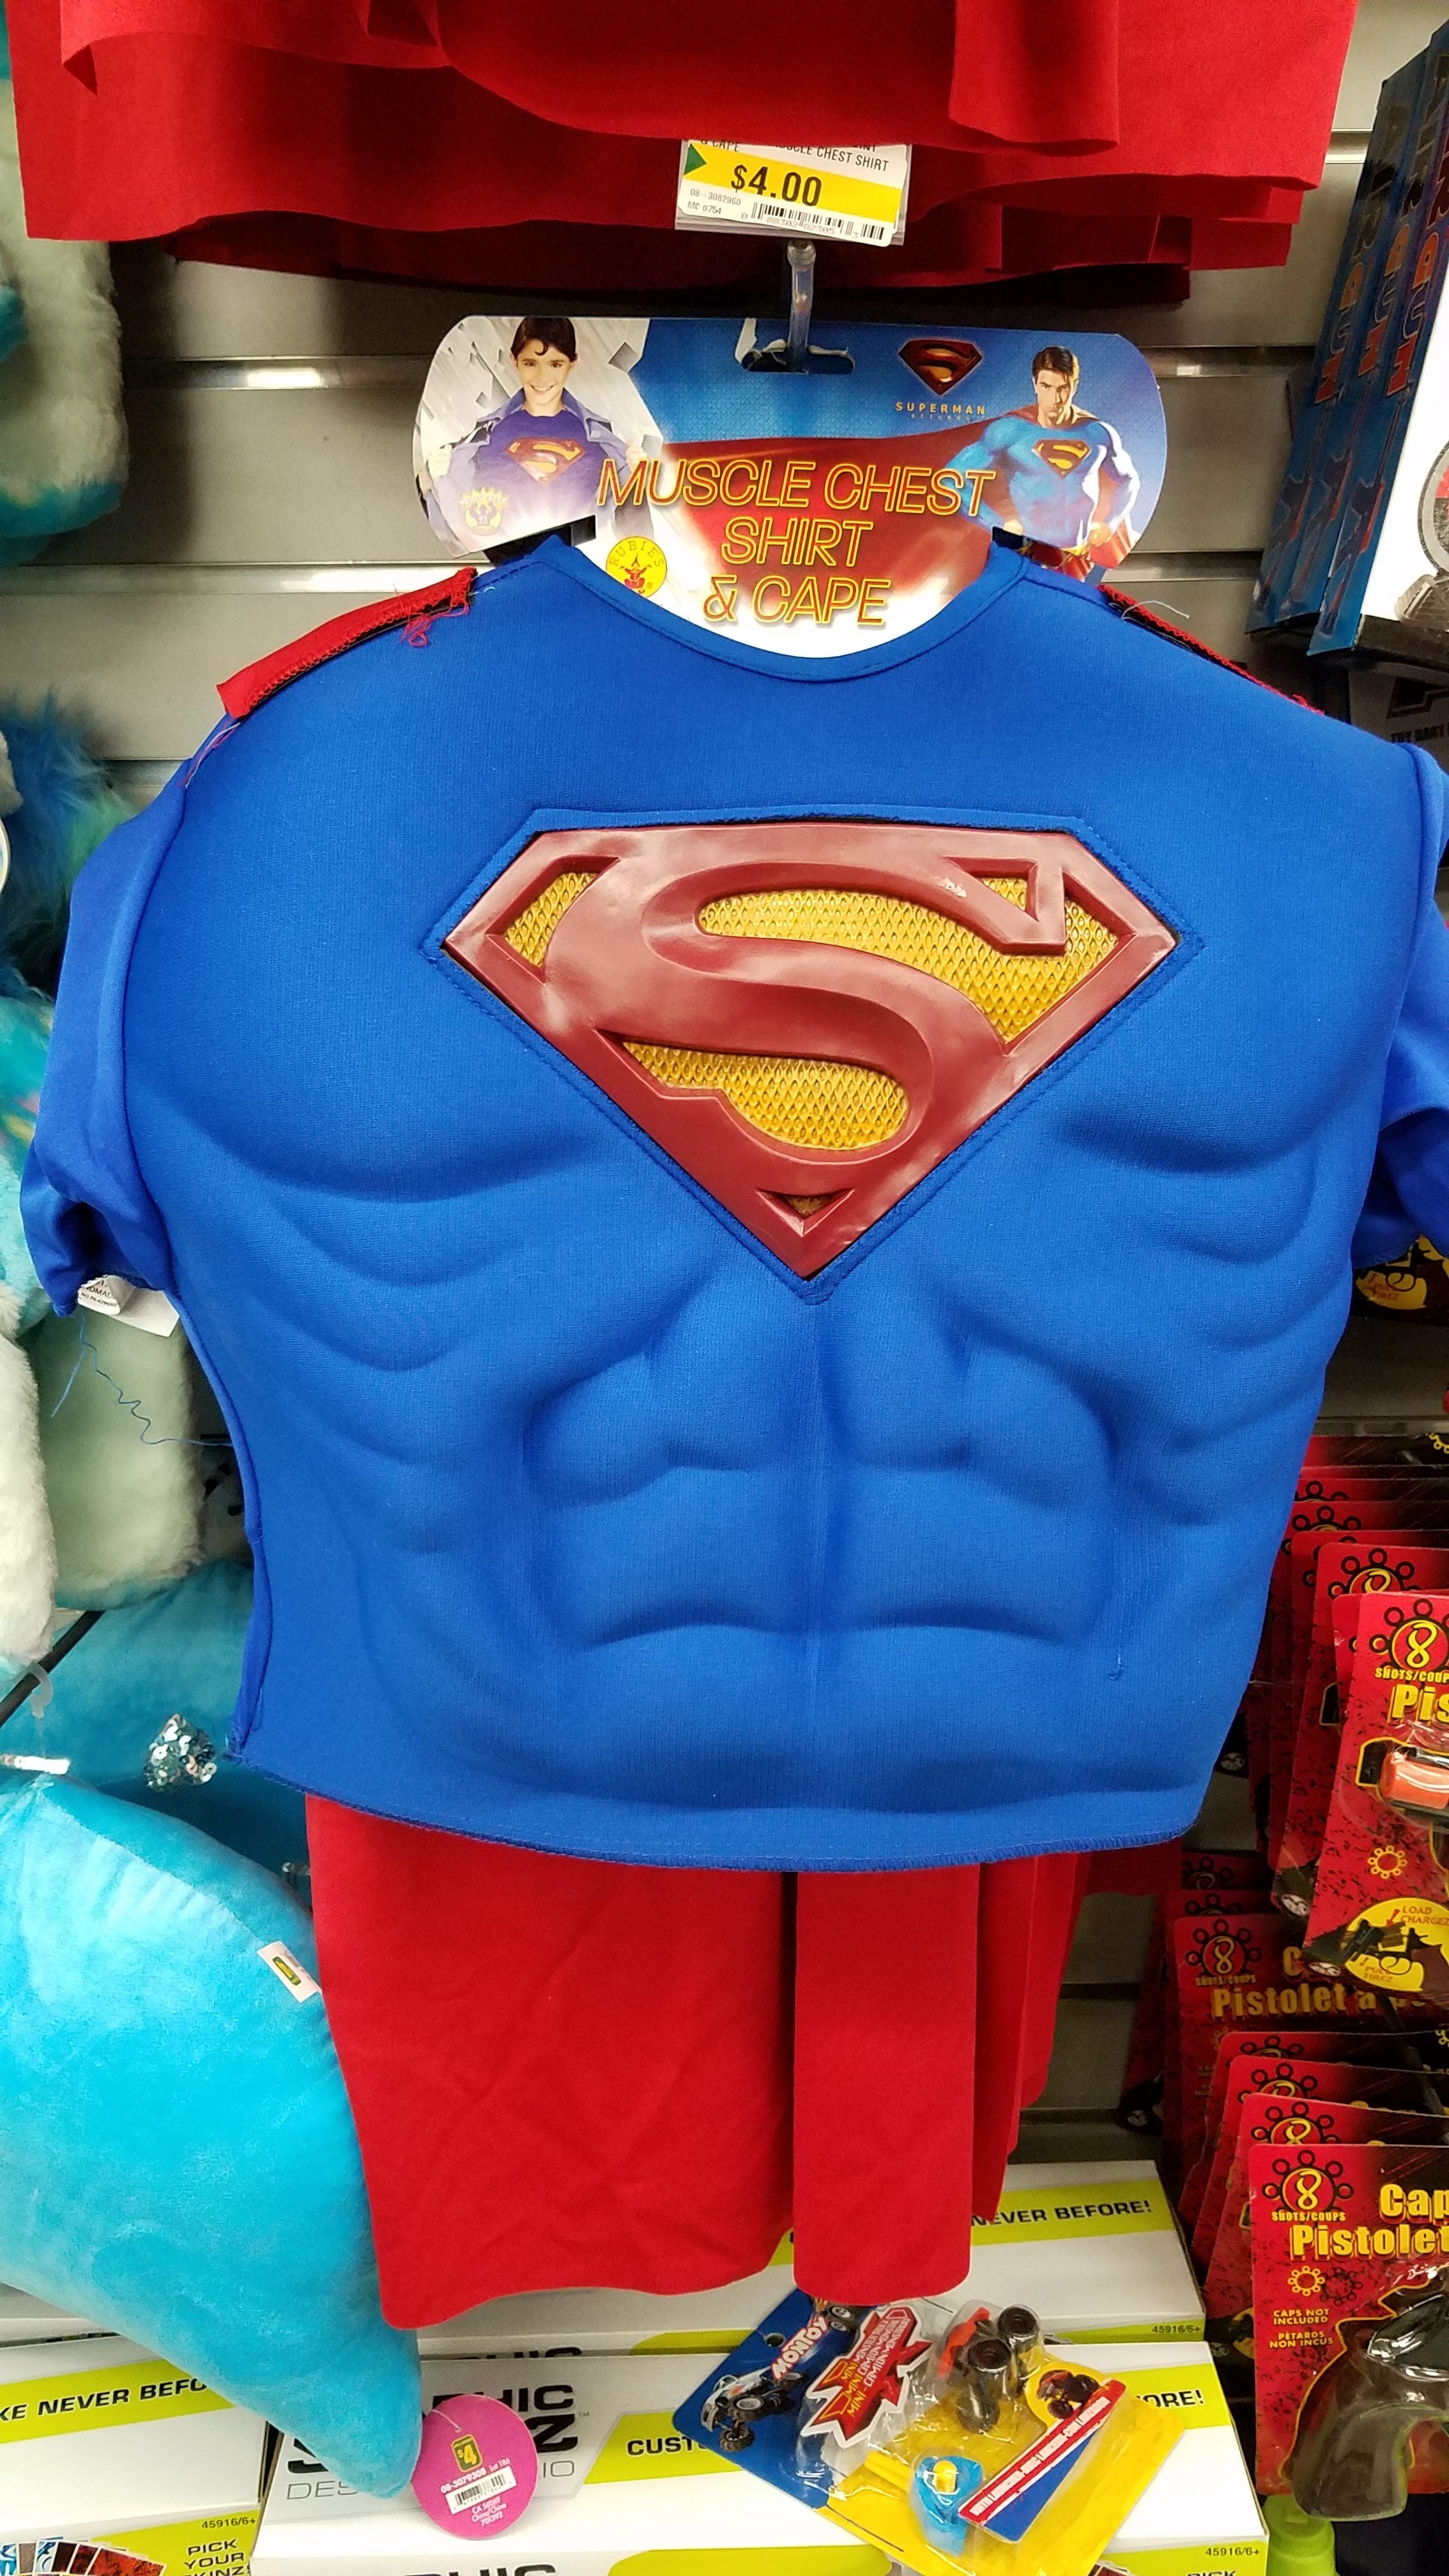 [Dollarama] Child's Superman Muscle Chest Shirt & Cape - $4 [GTA ...